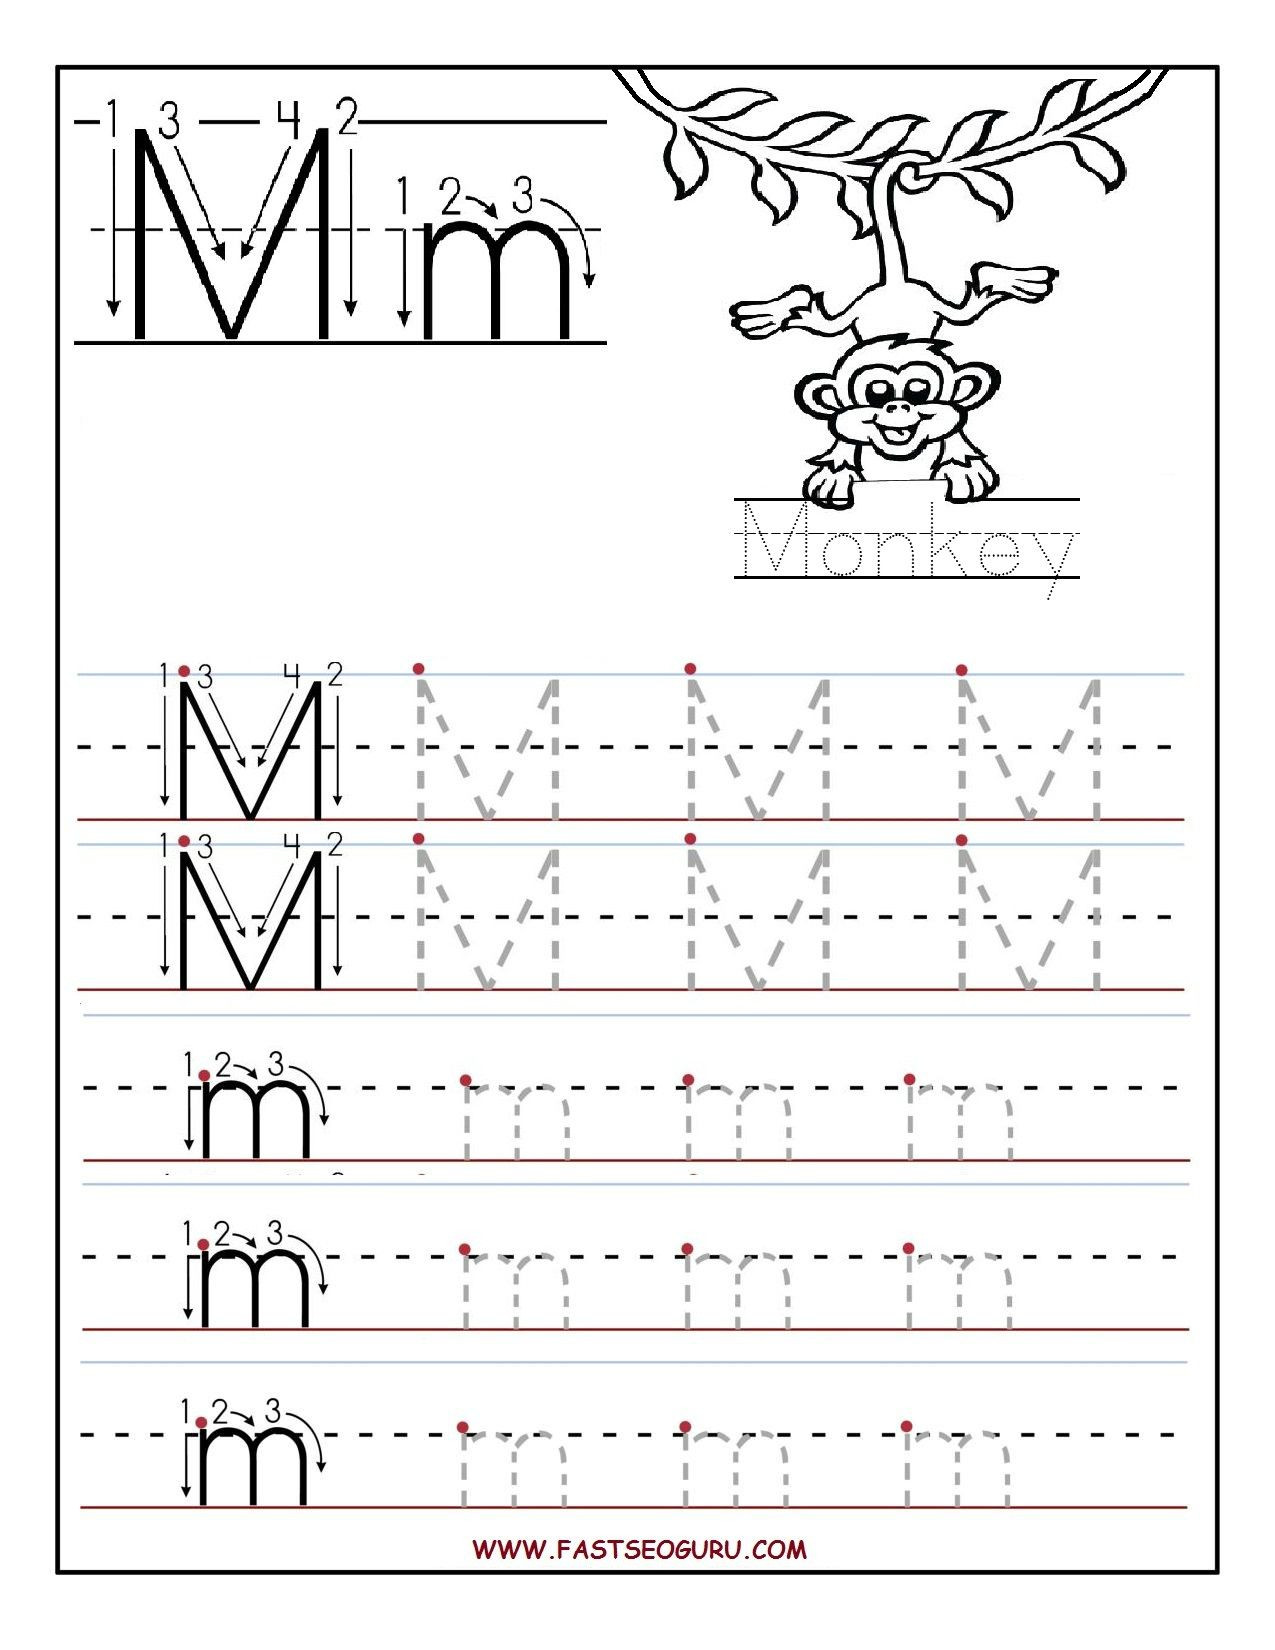 M Worksheets Preschool Printable Letter M Tracing Worksheets for Preschool